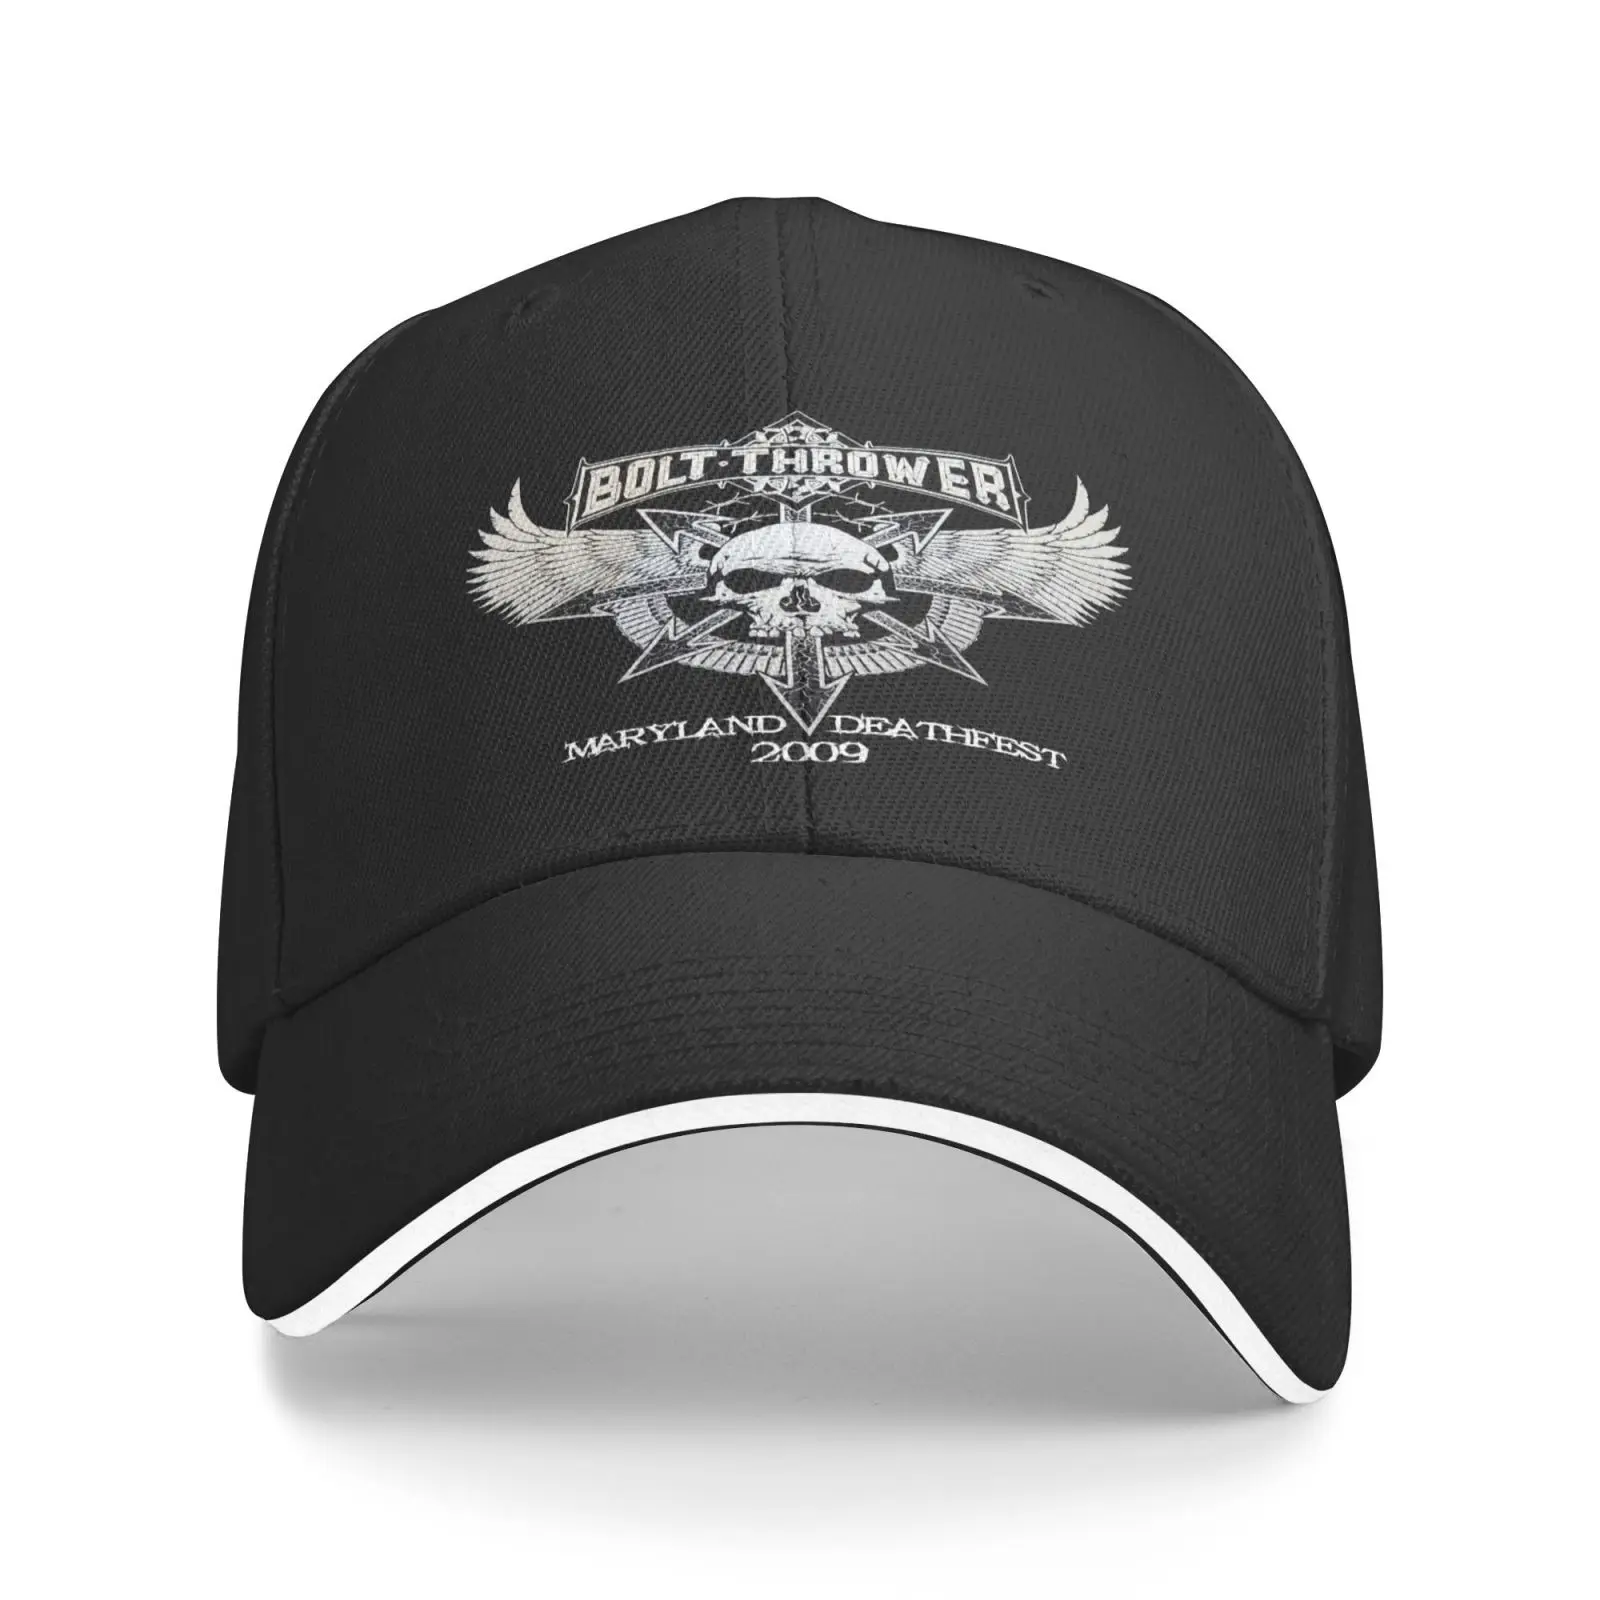 

Bolt Thrower 2009 Maryland Deathfest Mdf Hats For Men Cap Male Beret Man Beach Hip Hop Hats Designer Hat Satin Cap Custom Logo